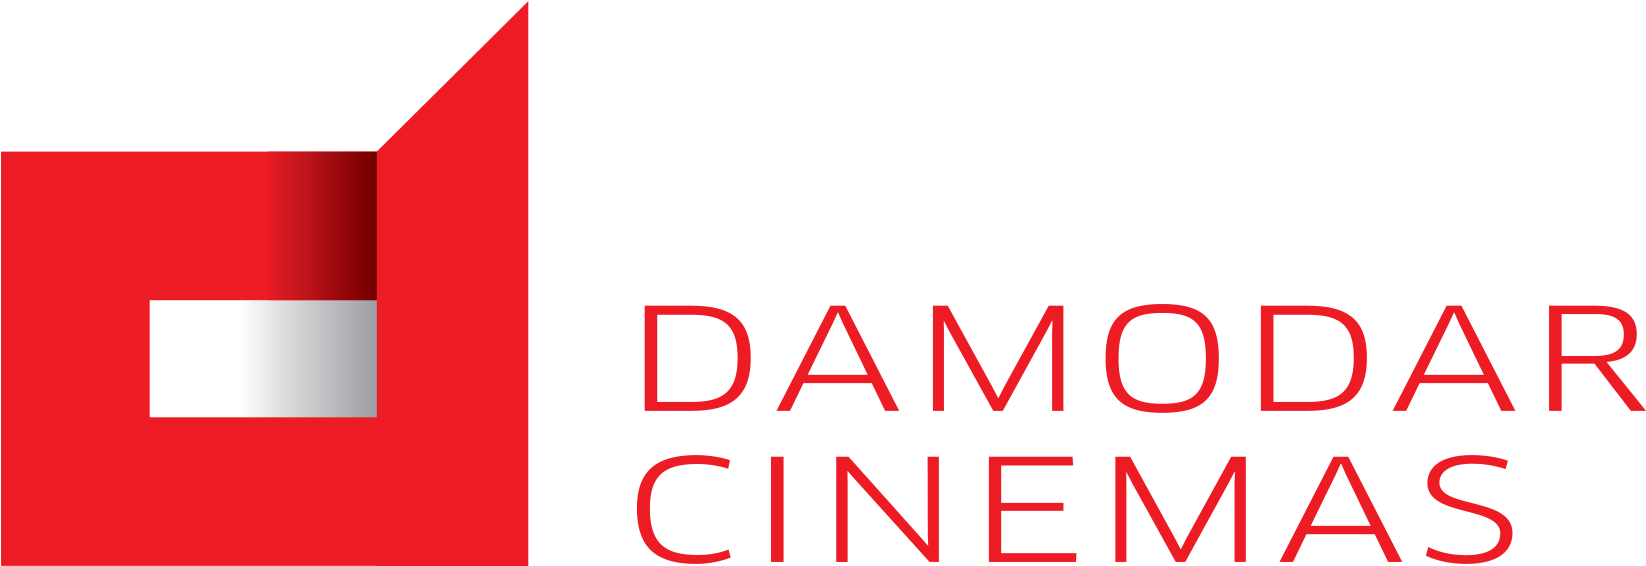 Damodar Cinemas Logo PNG